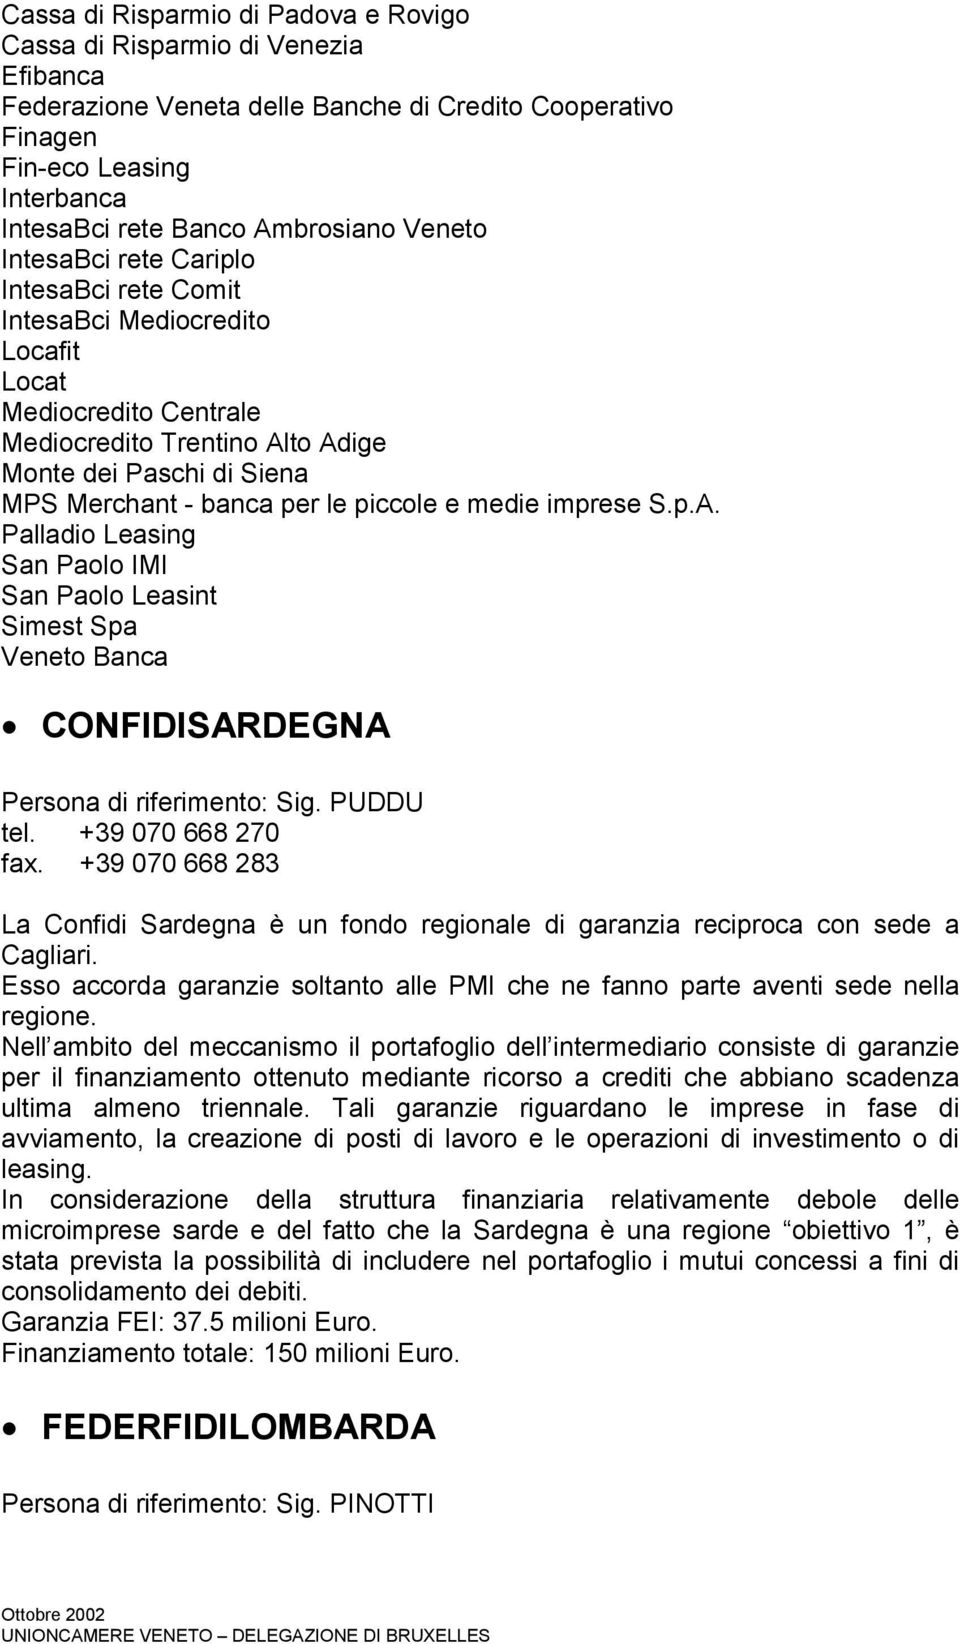 piccole e medie imprese S.p.A. Palladio Leasing San Paolo IMI San Paolo Leasint Simest Spa Veneto Banca CONFIDISARDEGNA Persona di riferimento: Sig. PUDDU tel. +39 070 668 270 fax.